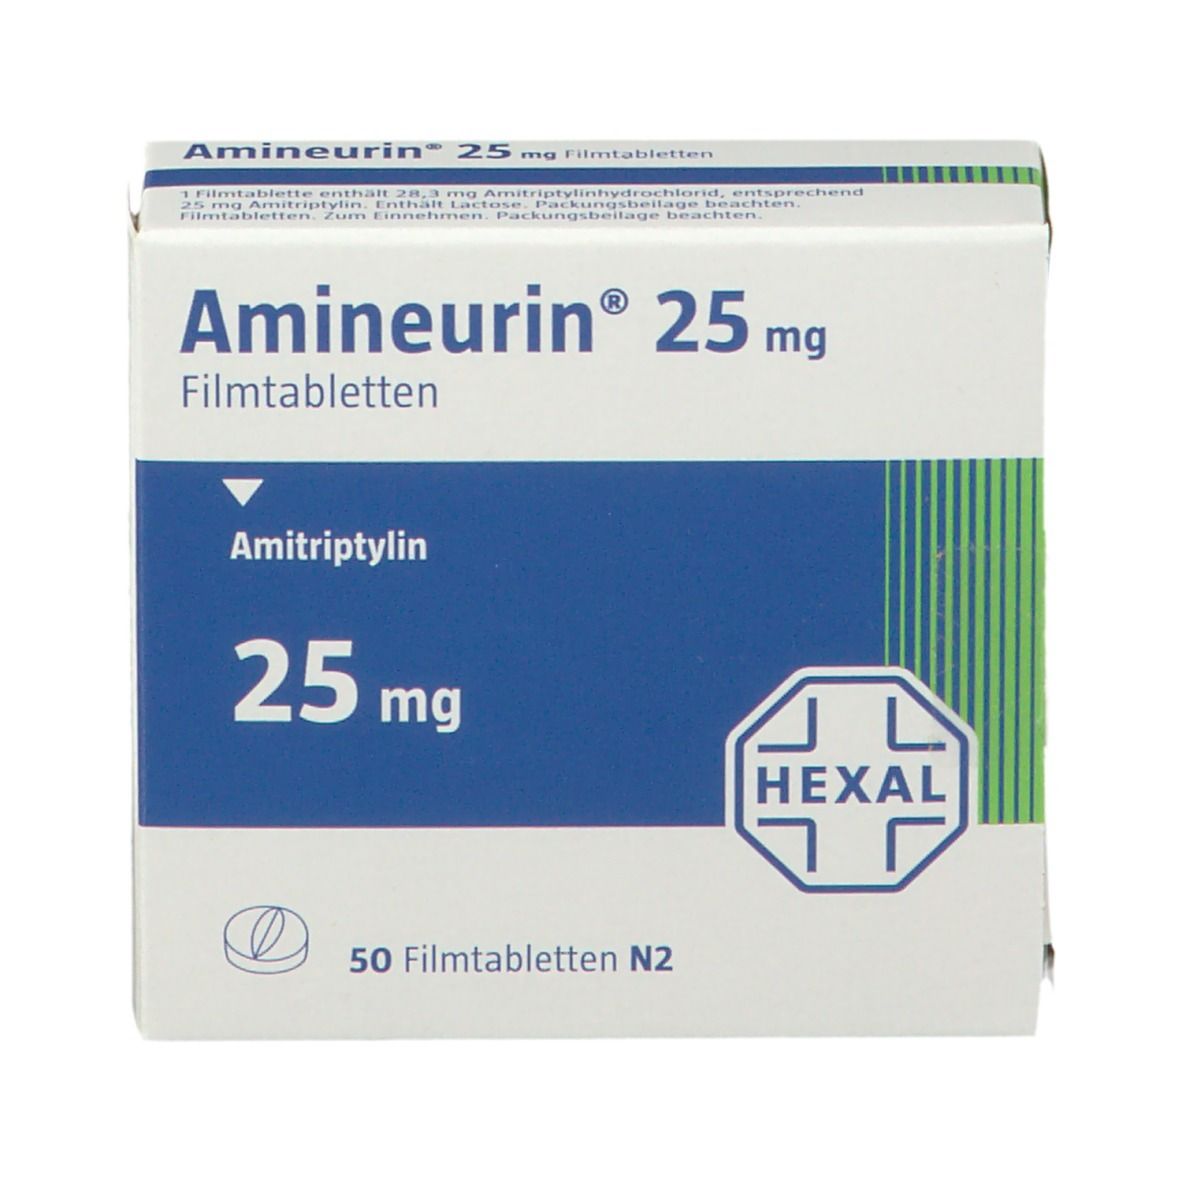 Amineurin® 25 mg